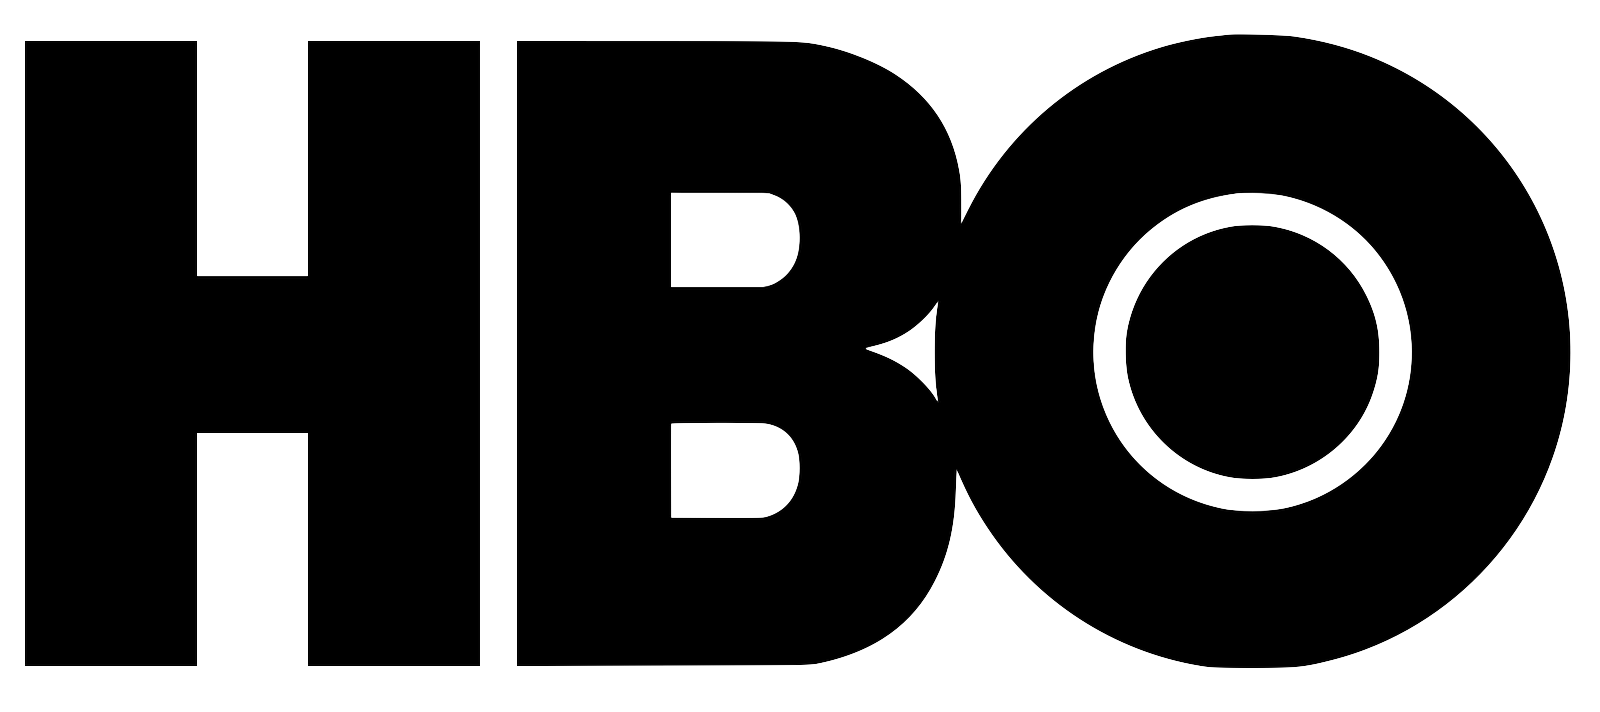 hbo-logo.png